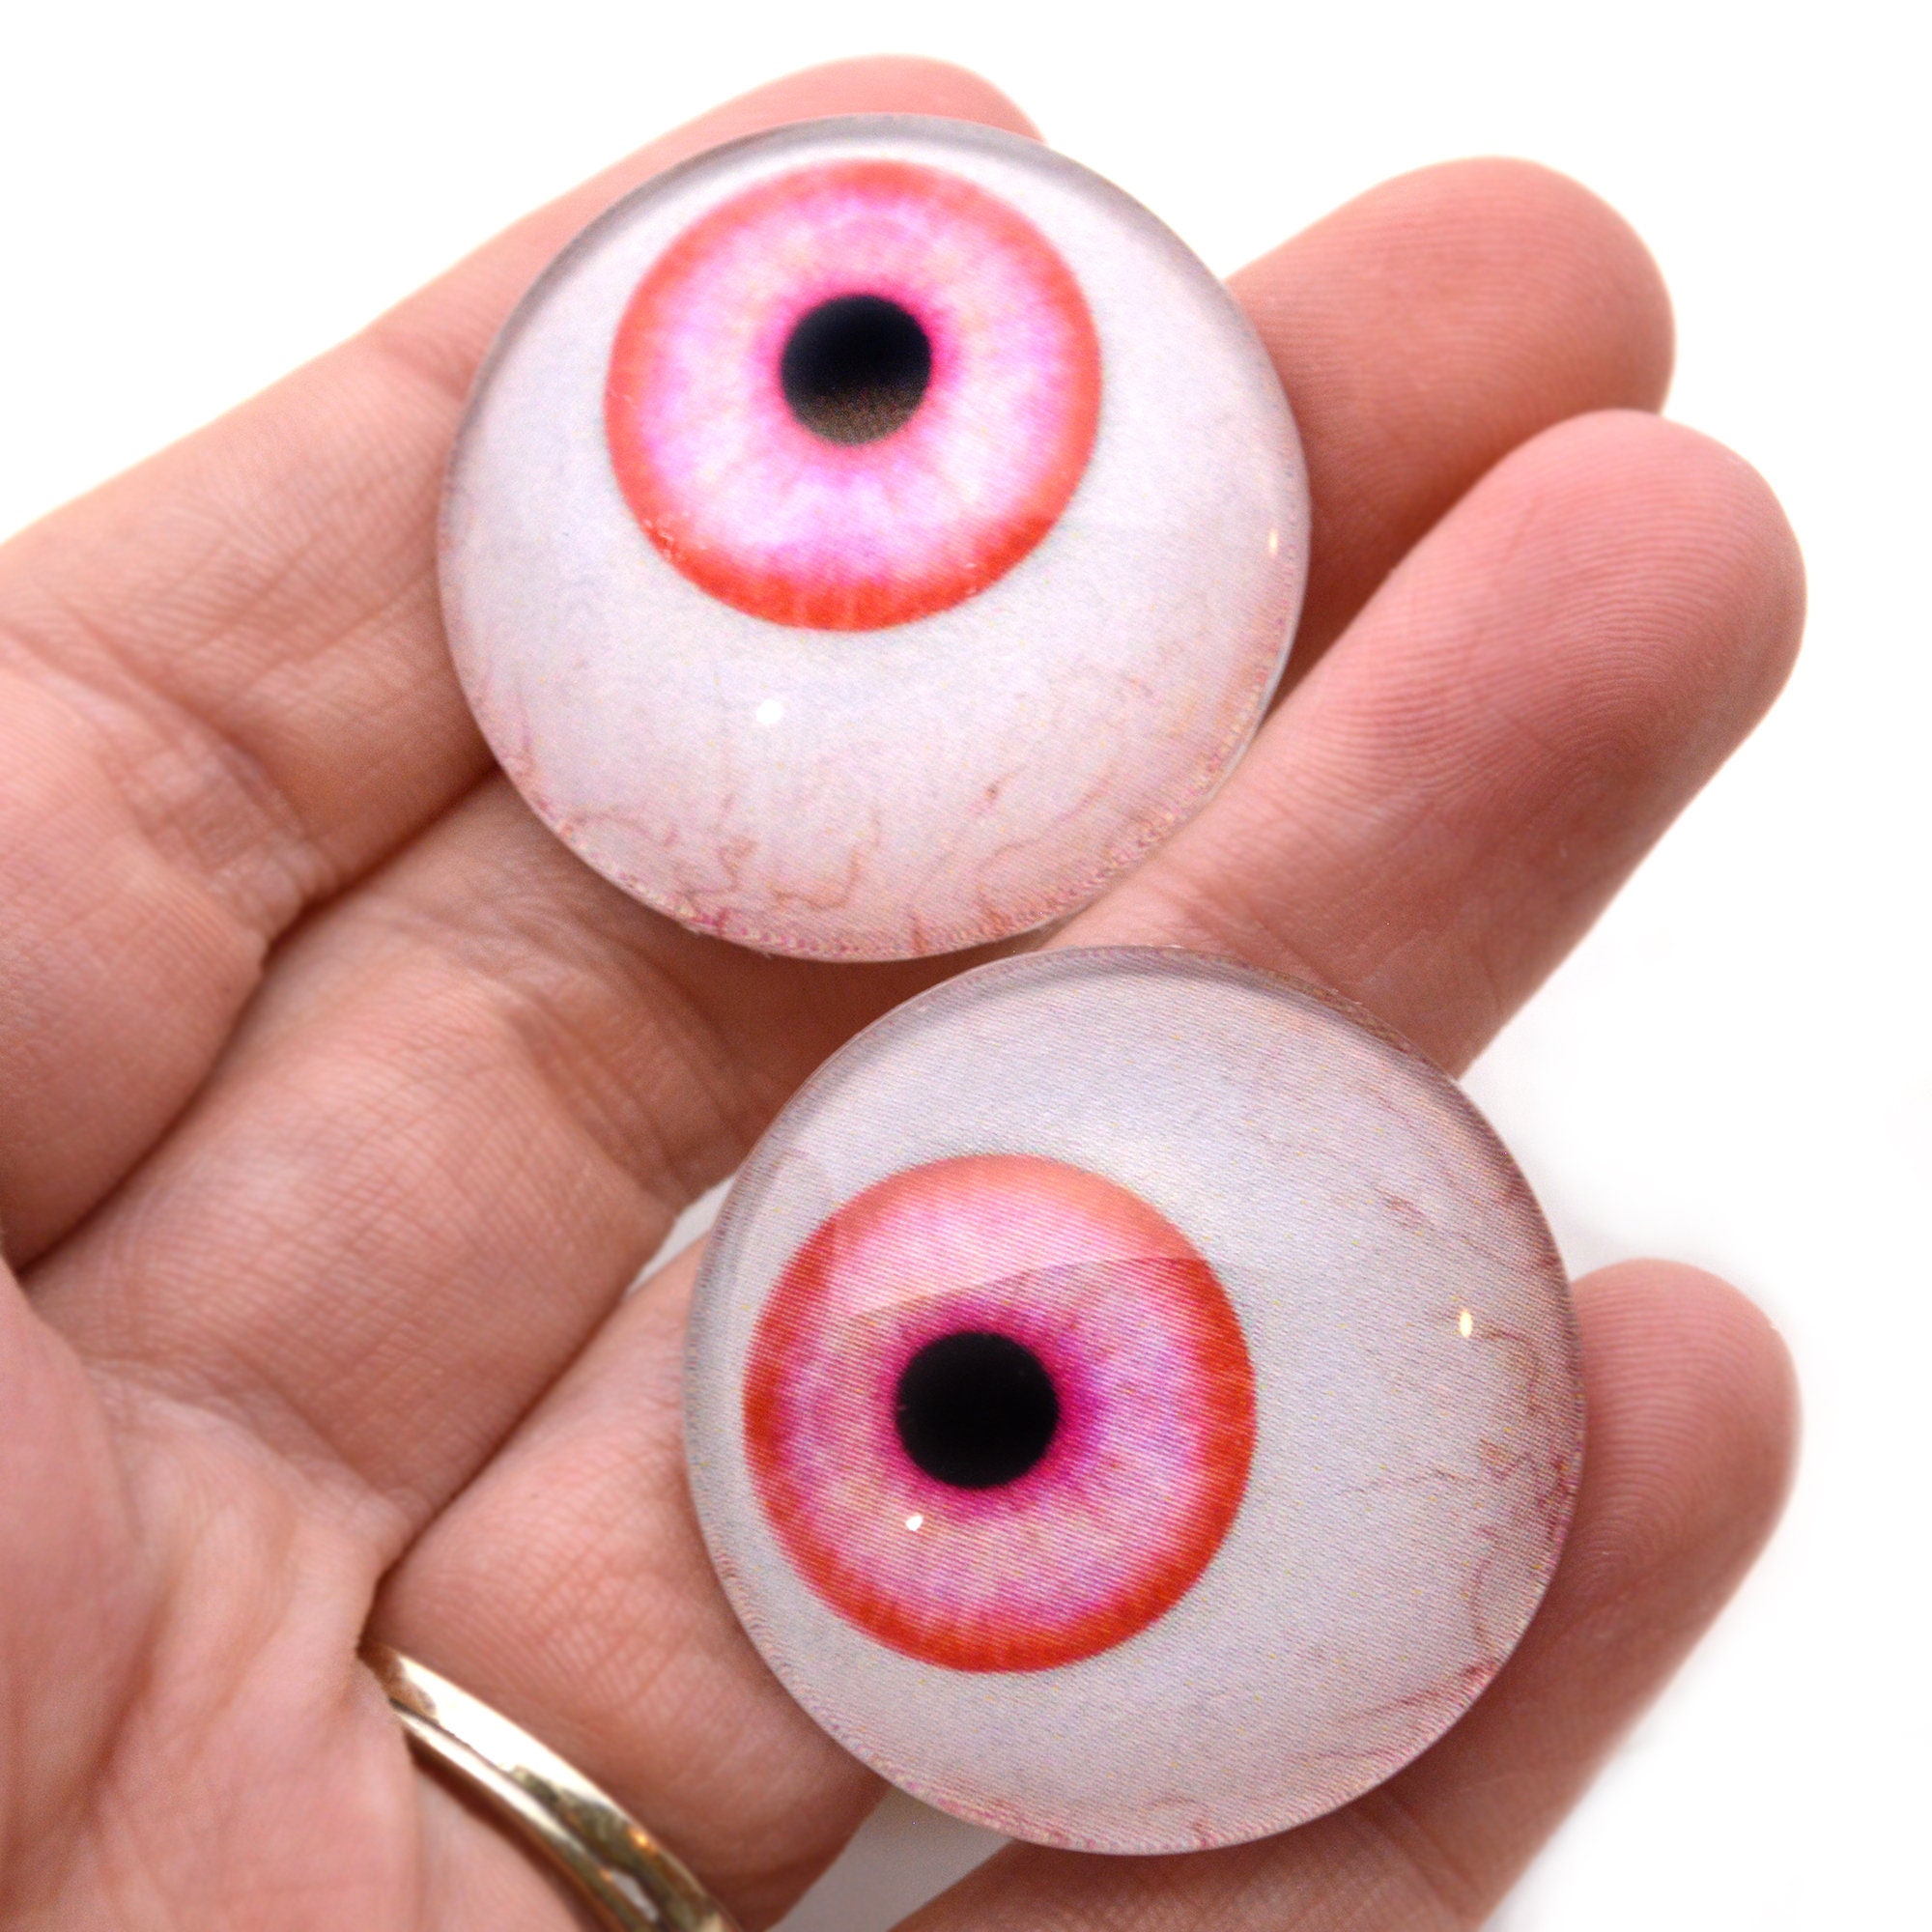 Pair of glass eyes for statue Diameter 6 mm - 1550067